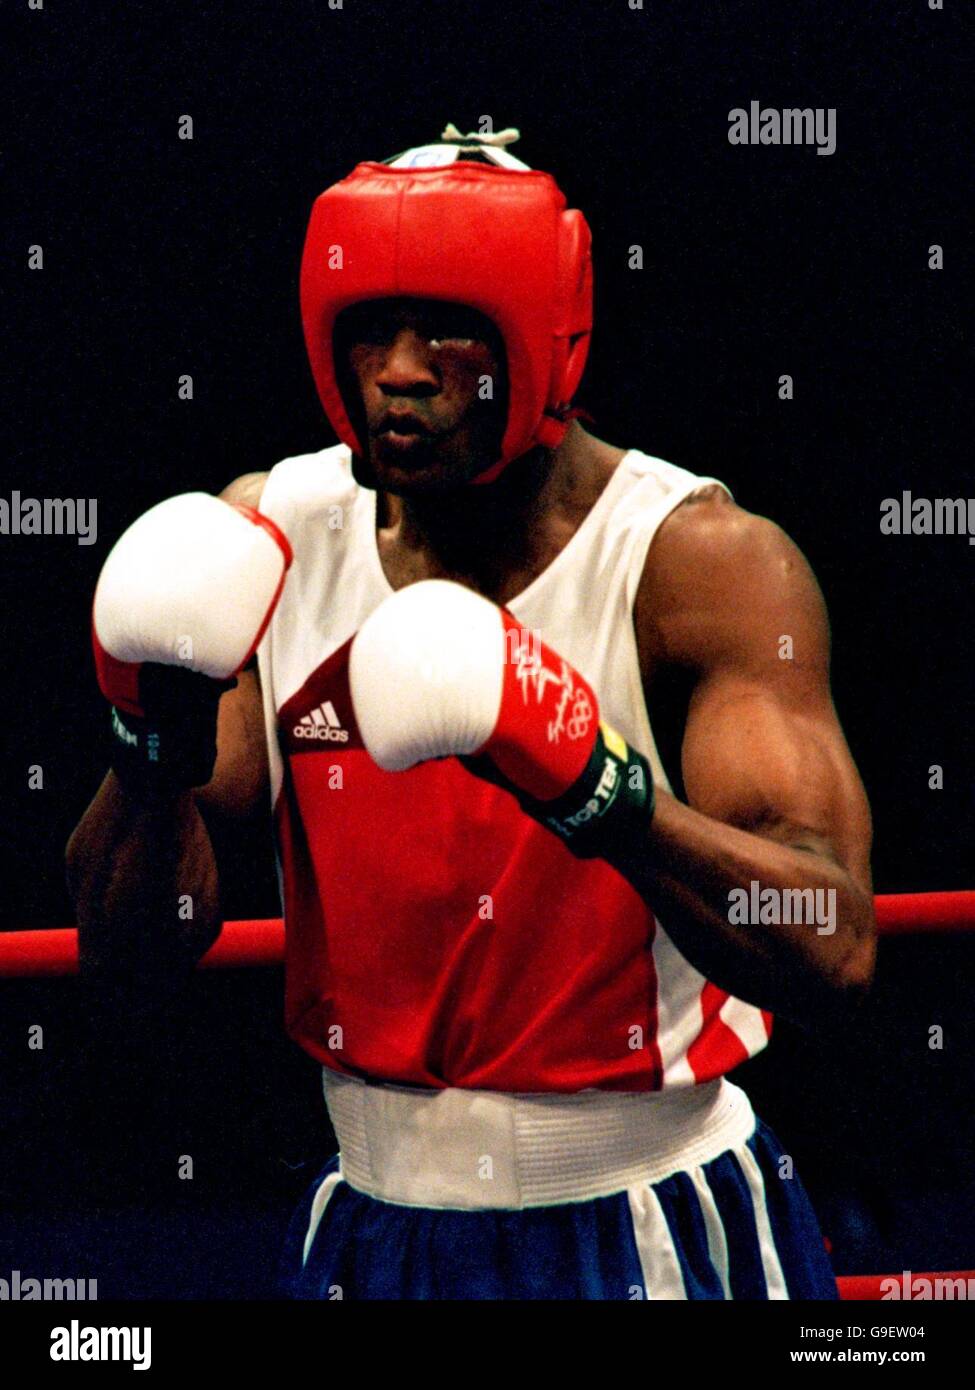 Sydney 2000 Olympics - Boxing - Men's 91kg. Cuba's Felix Savon in action againt Russia's Sultanahmed Ibzagimov Stock Photo